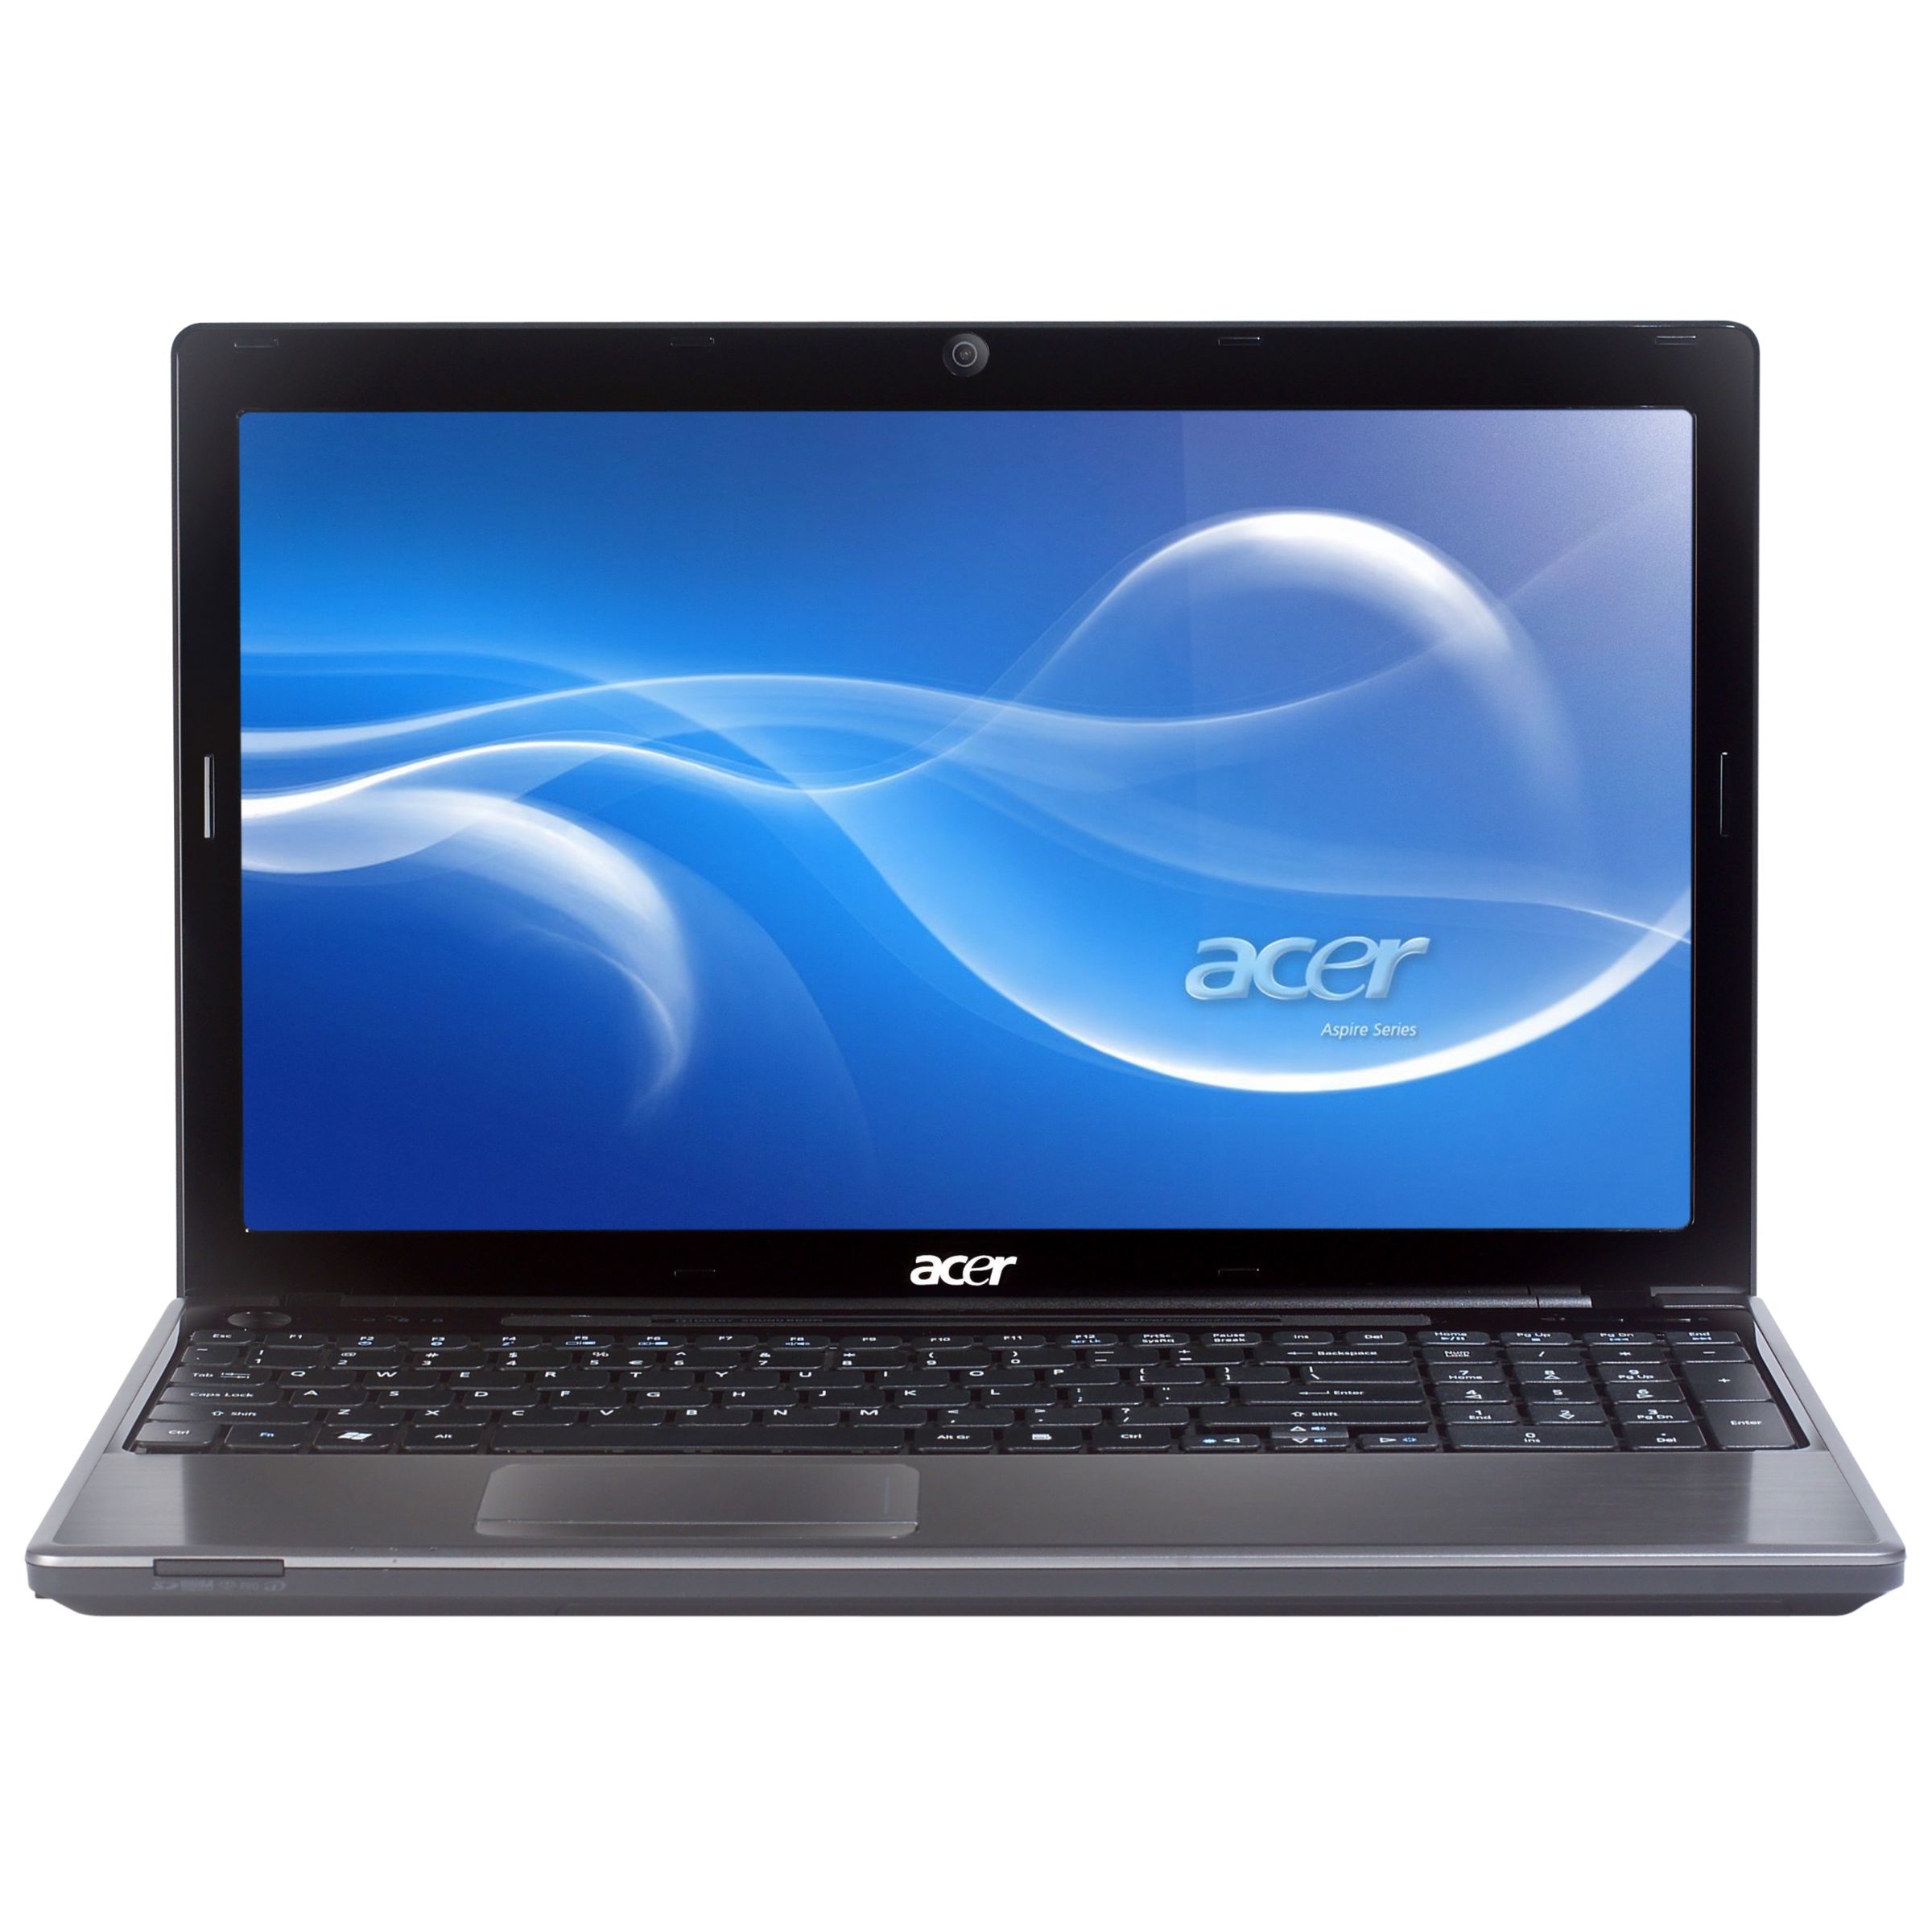 Acer Aspire 5553 Laptop, AMD Phenom Quad Core, 500GB, 2GHz, 6GB RAM with 15.6 Inch Display at John Lewis